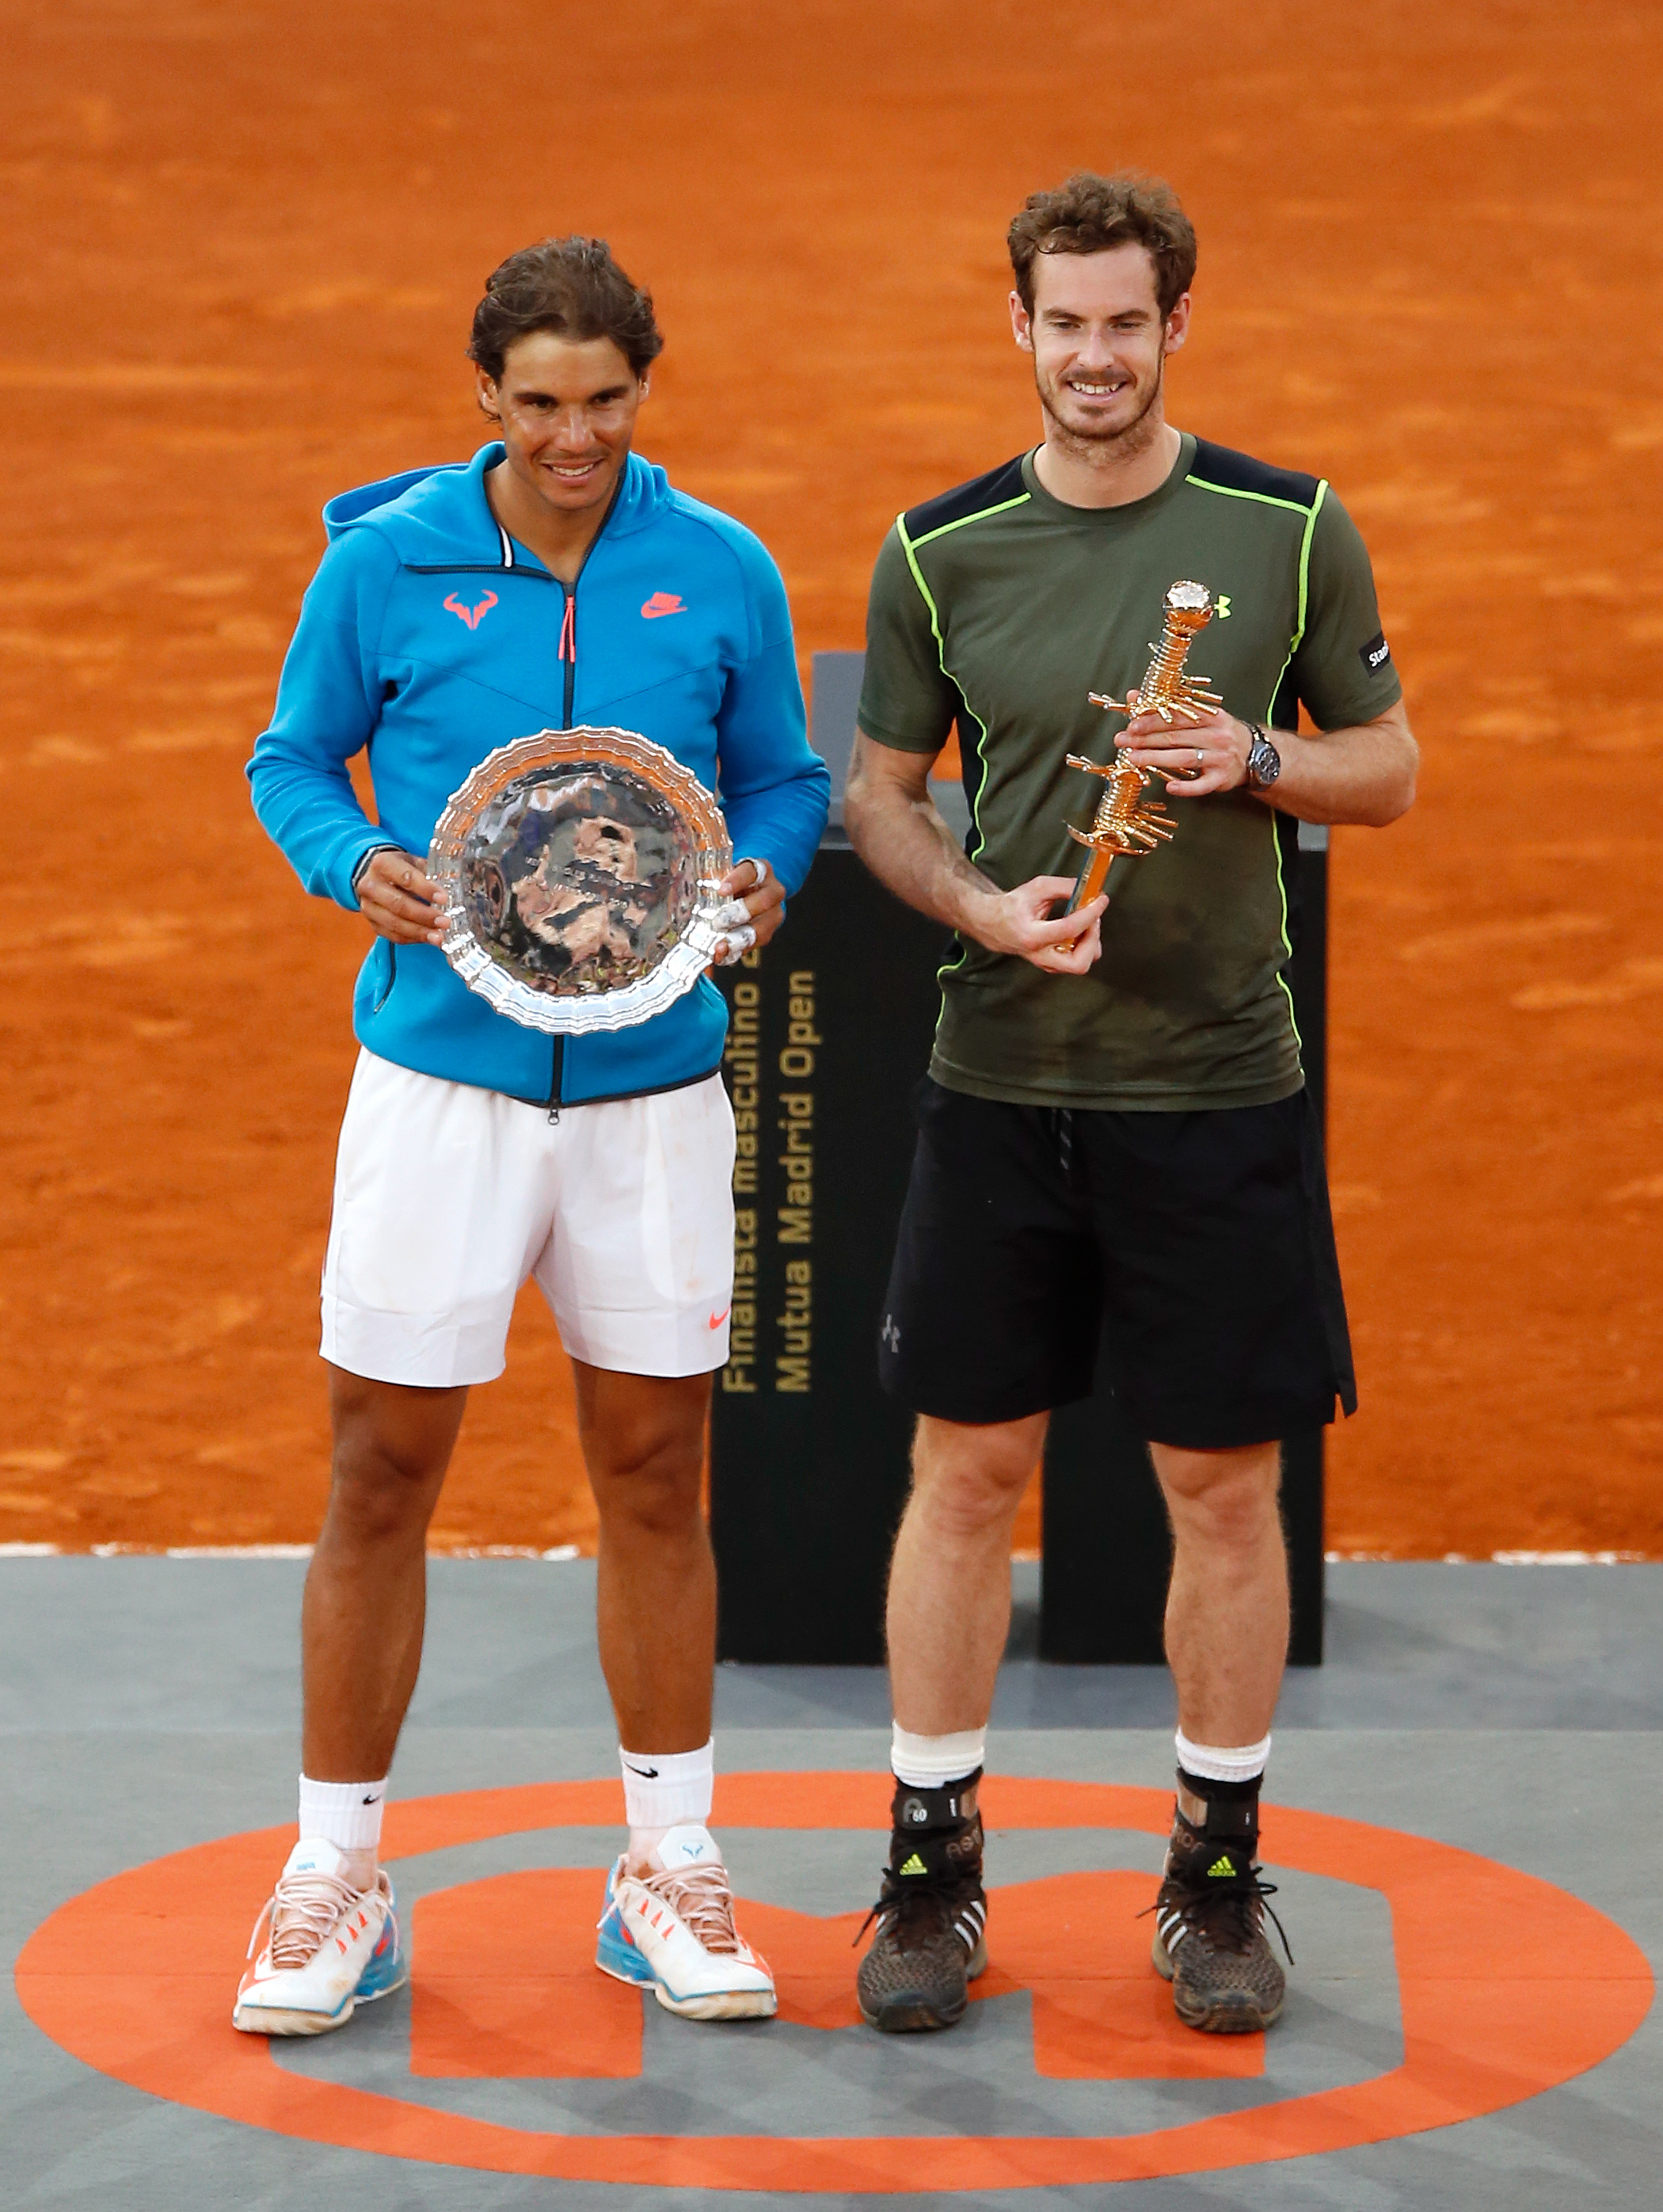 Rafael Nadal loses Madrid Open final to Andy Murray [PHOTOS] – Rafael Nadal Fans